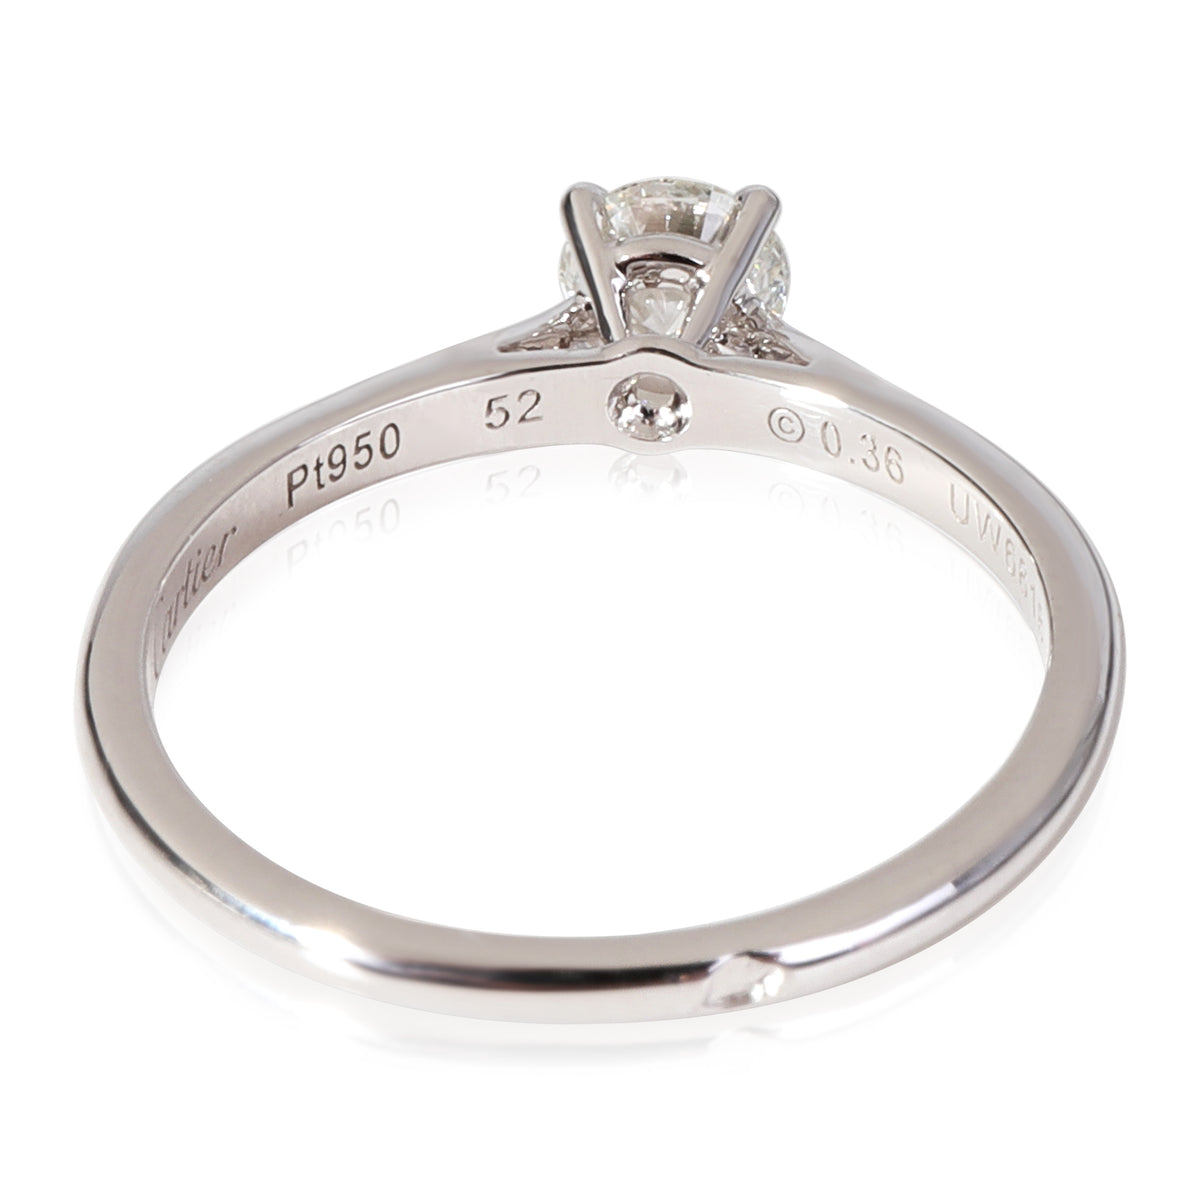 Cartier 1895 Diamond Engagement Ring in Platinum G VVS1 0.36 CTW